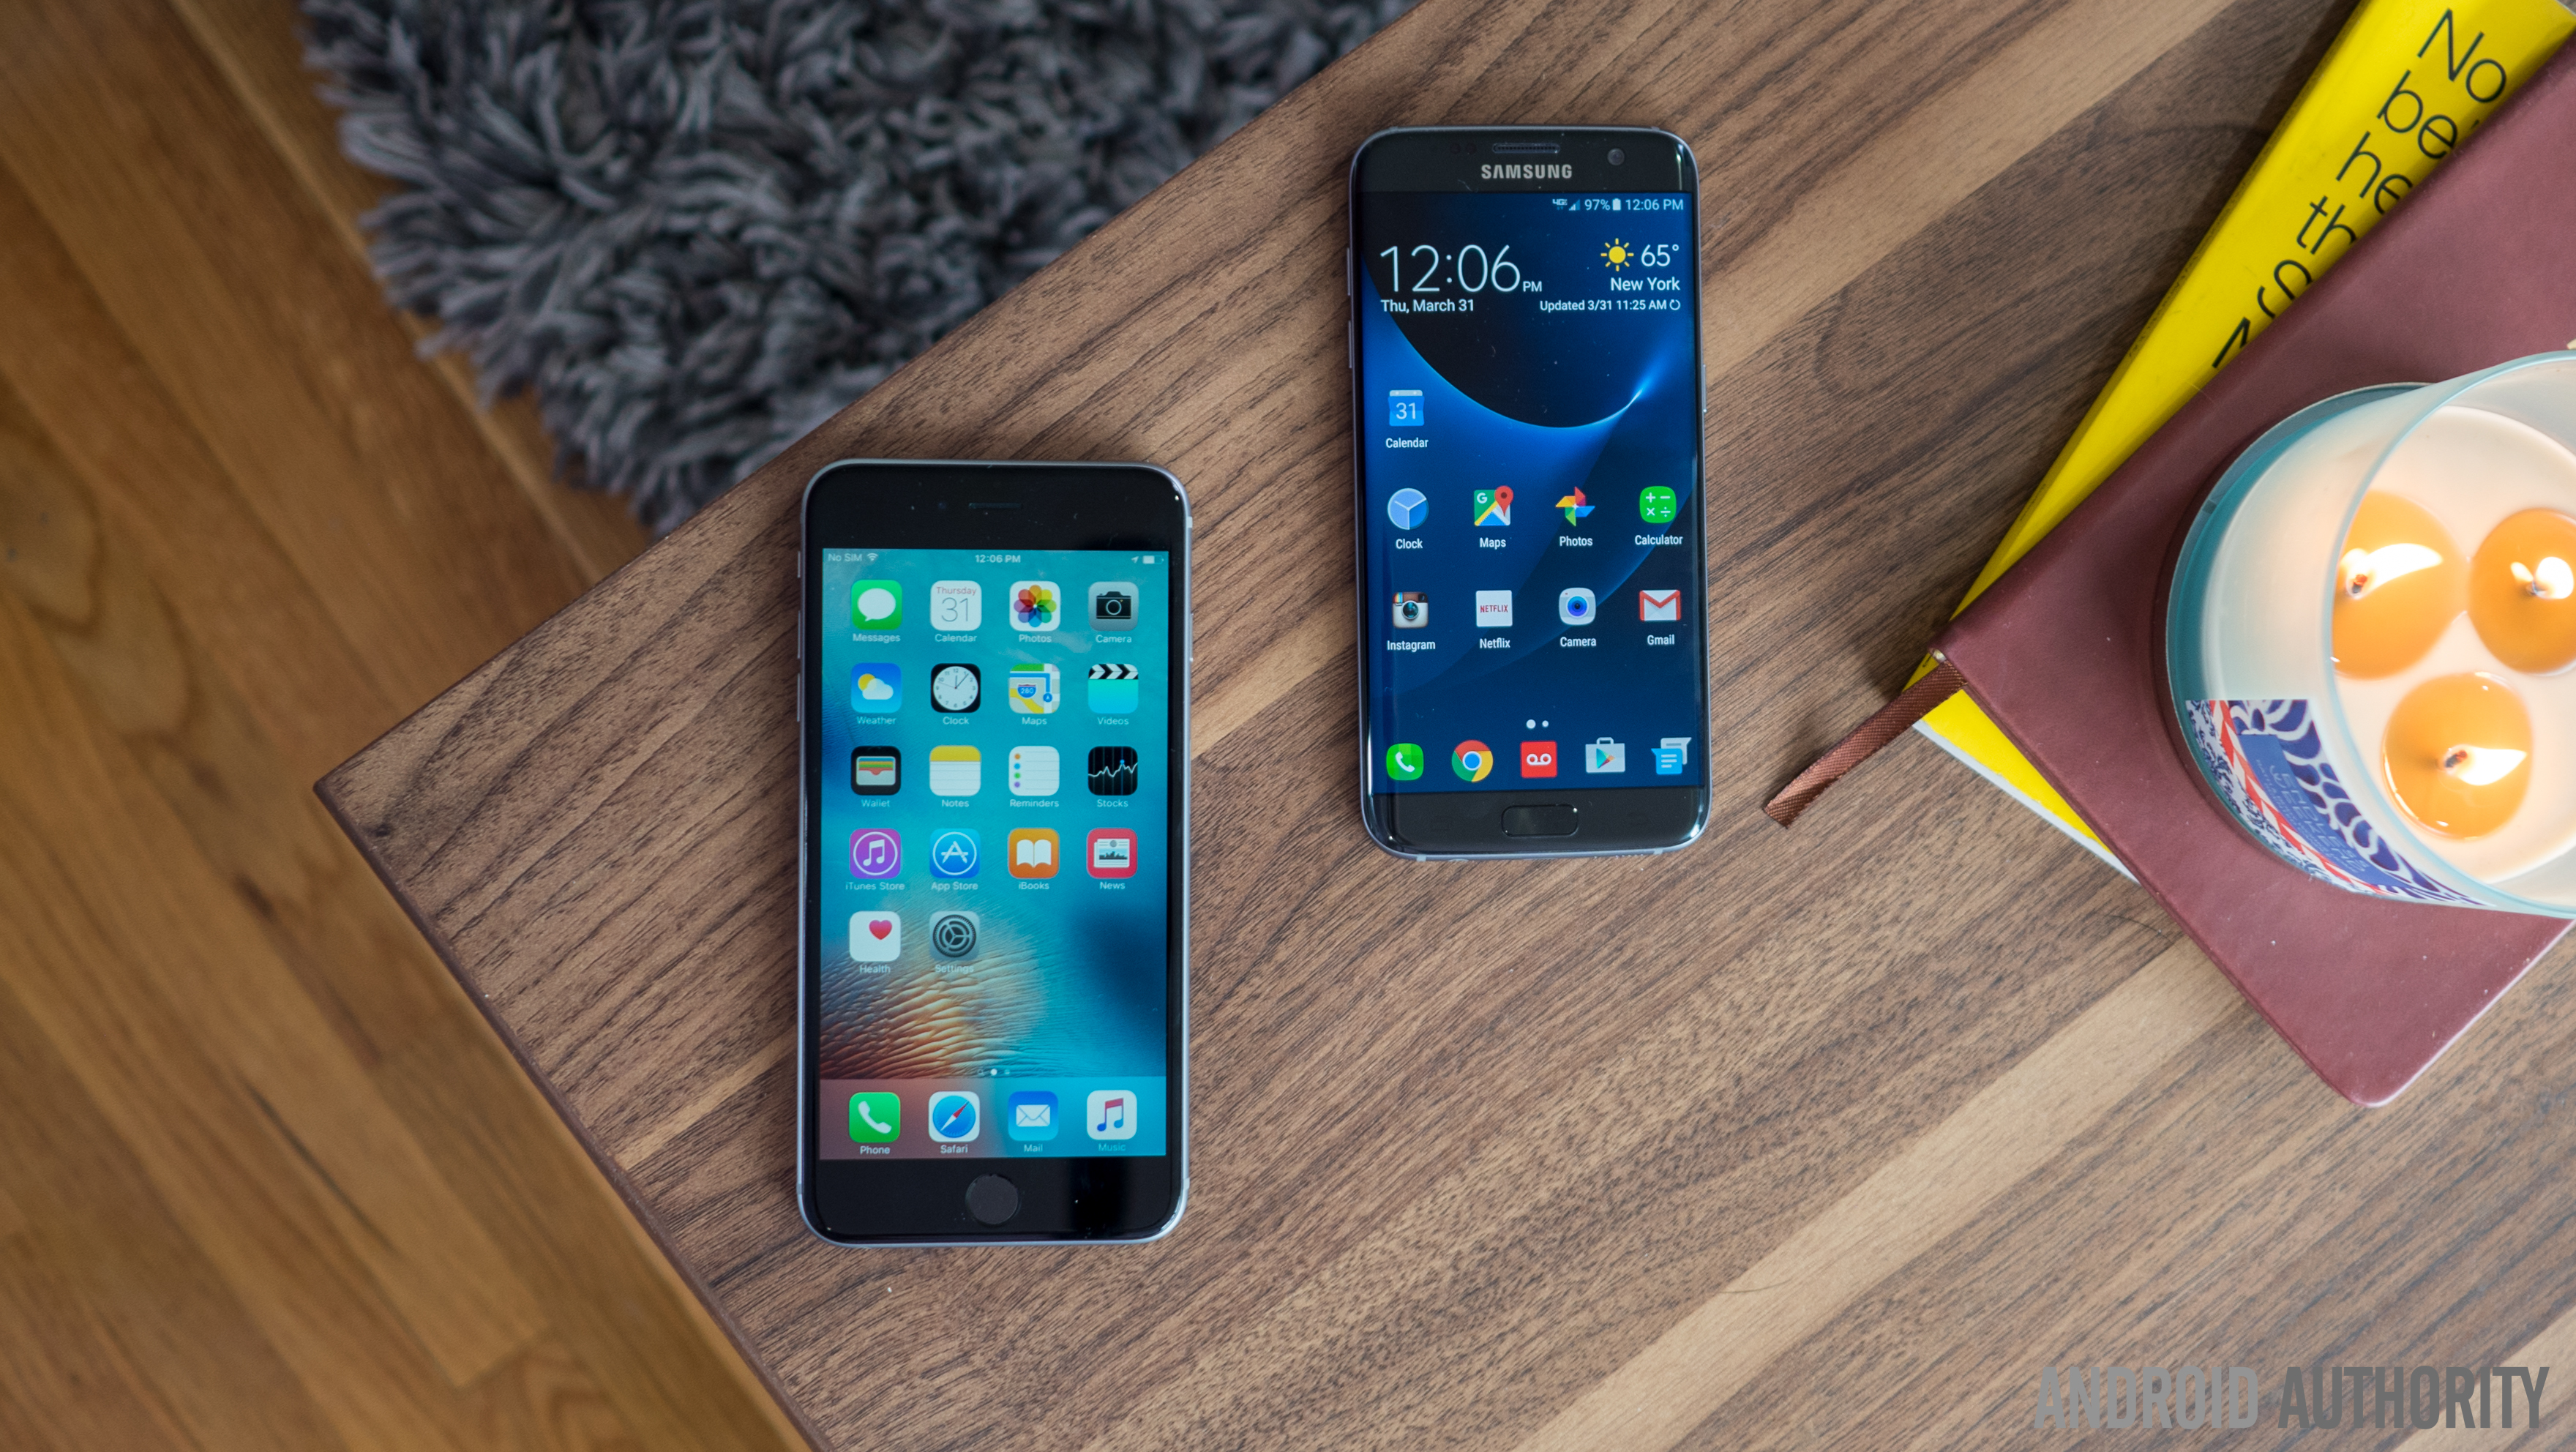 Galaxy-S7-Edge-vs-iPhone-6s-plus-7of18